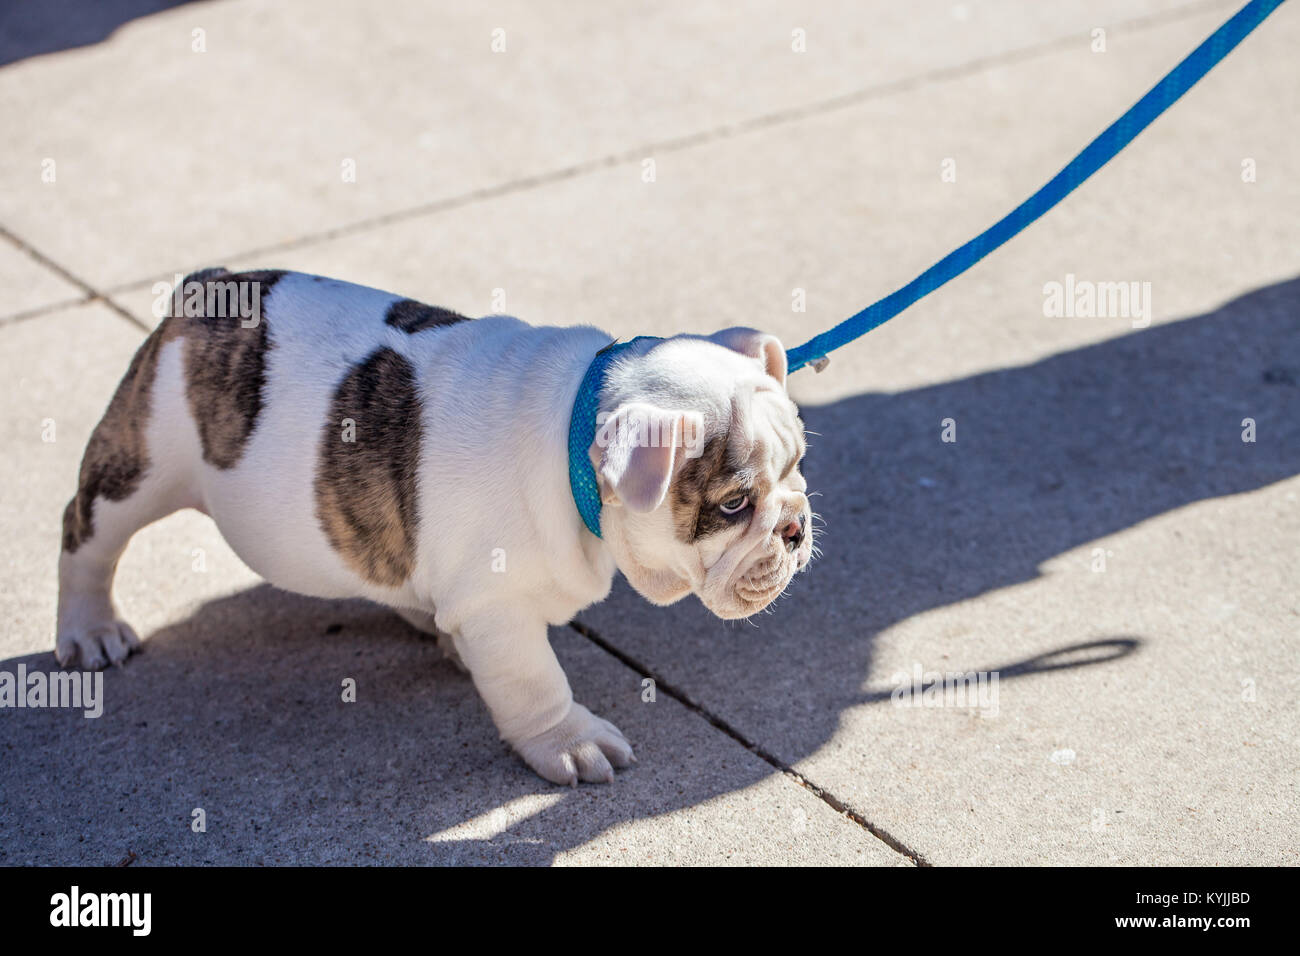 English Bulldog puppy on leash / Unhappy or sad concept Stock Photo